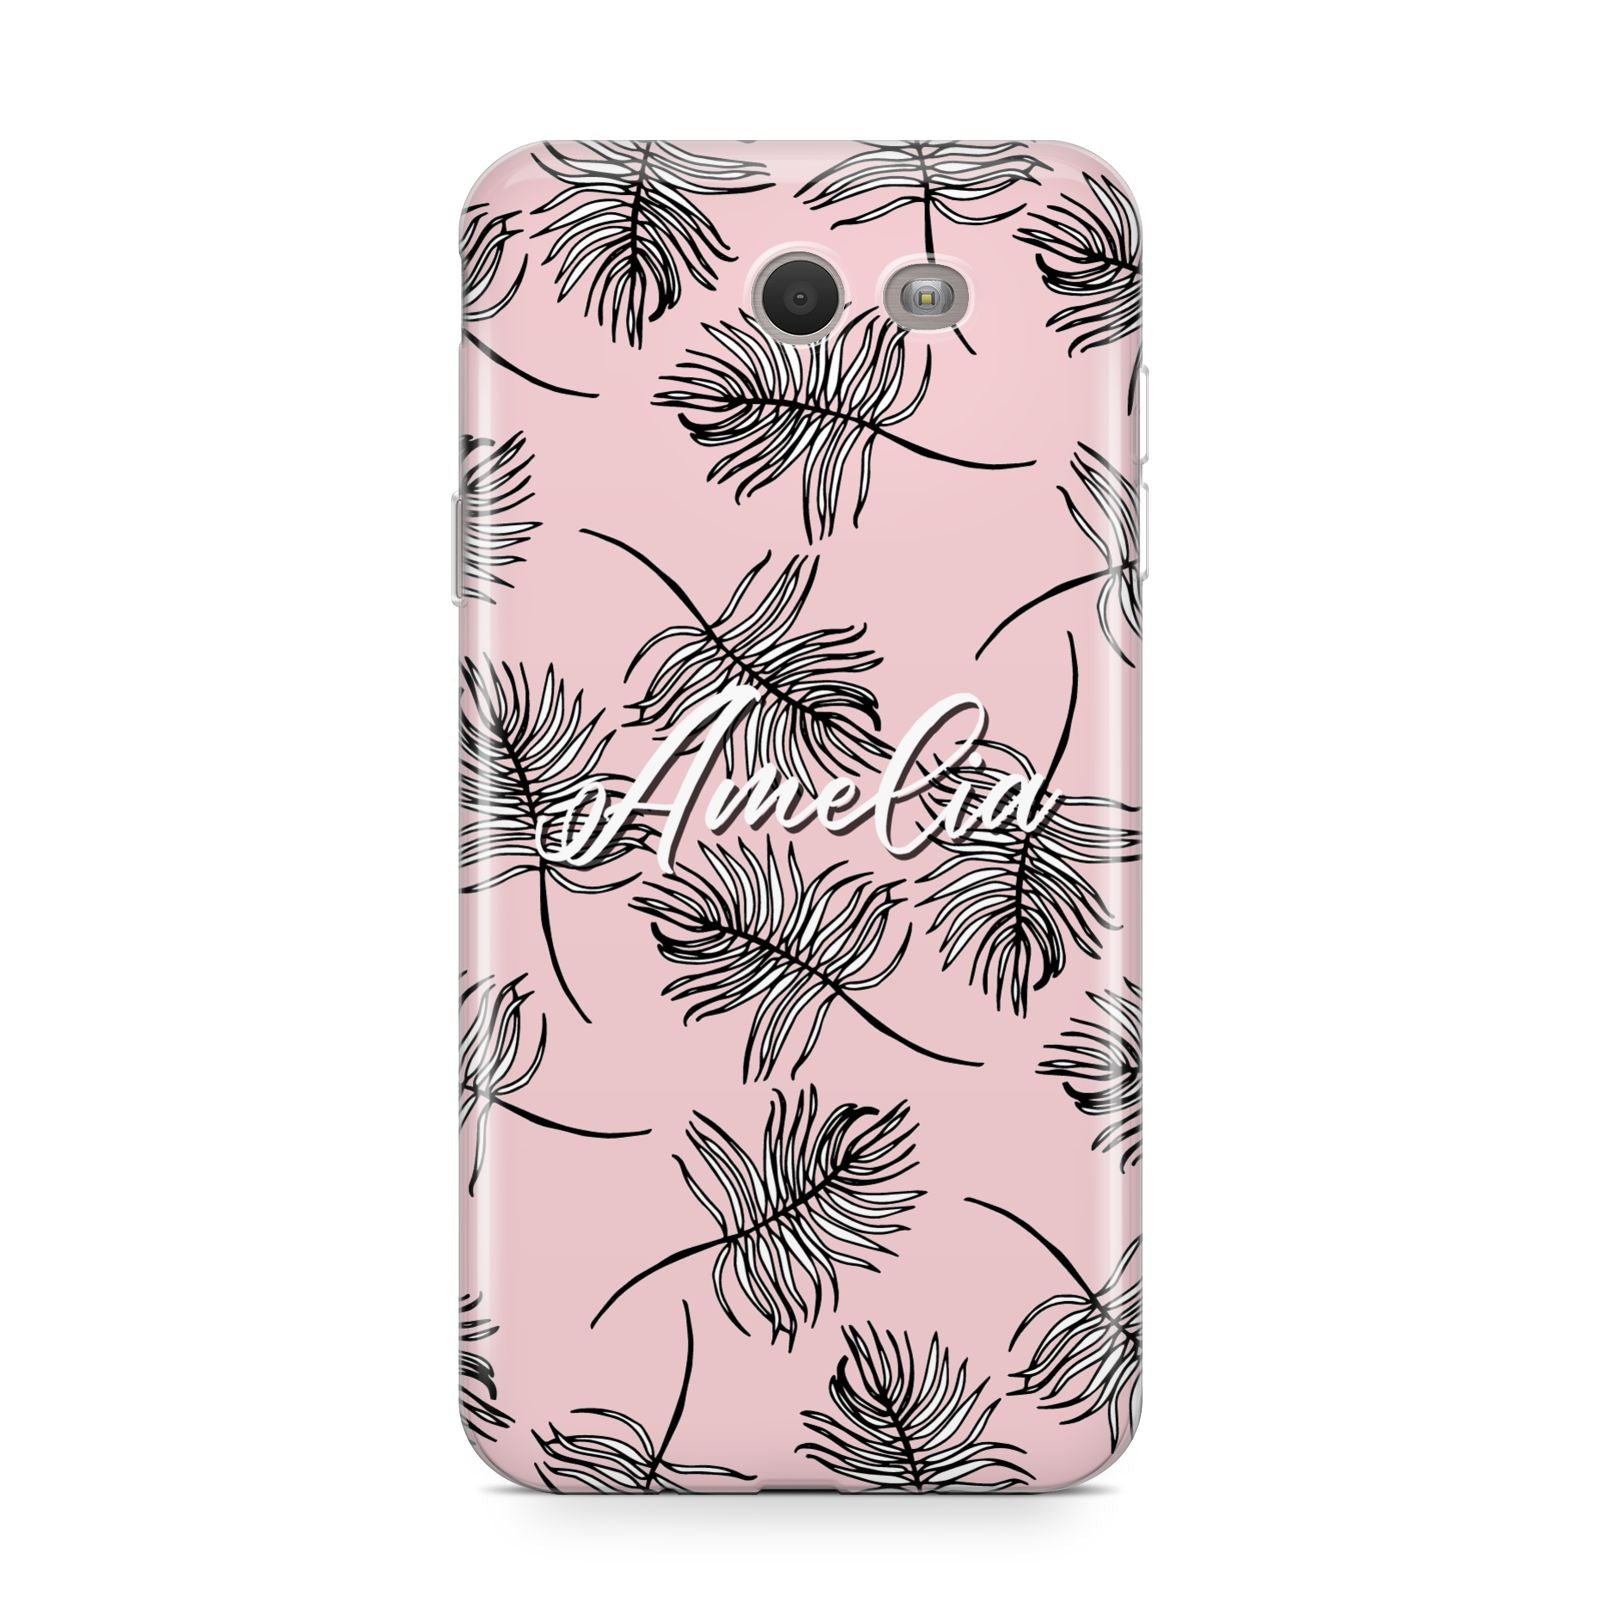 Personalised Pink Monochrome Tropical Leaf Samsung Galaxy J7 2017 Case